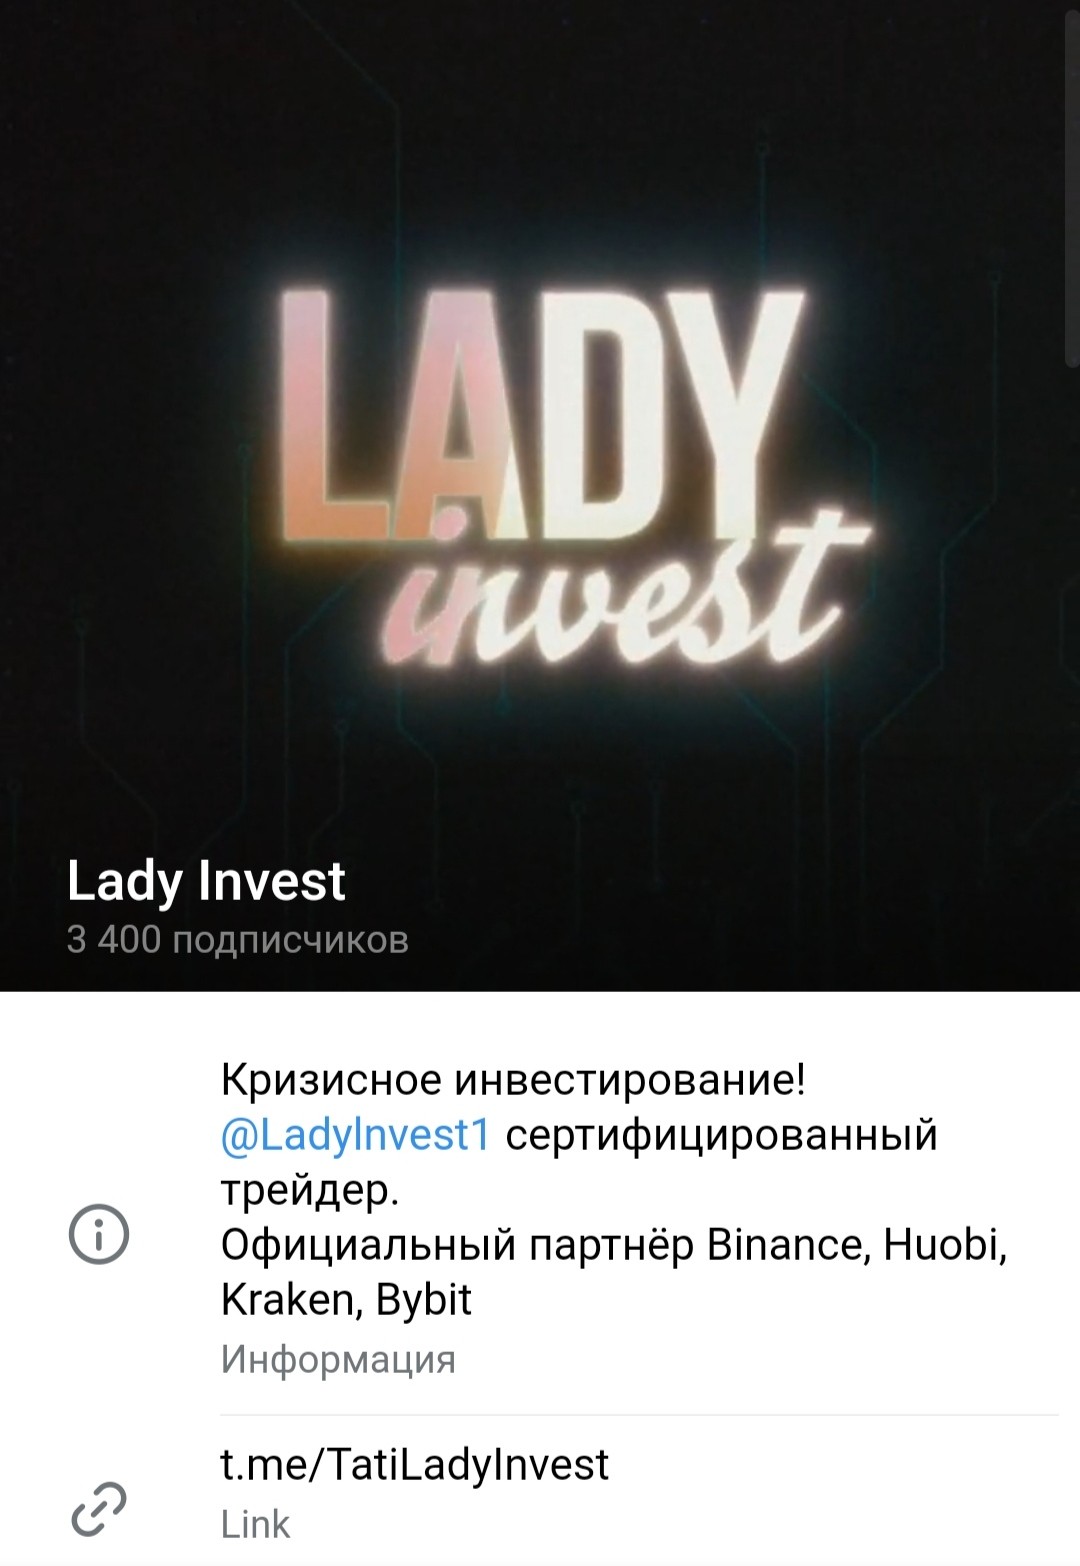 Lady Invest Tatiladyinvest